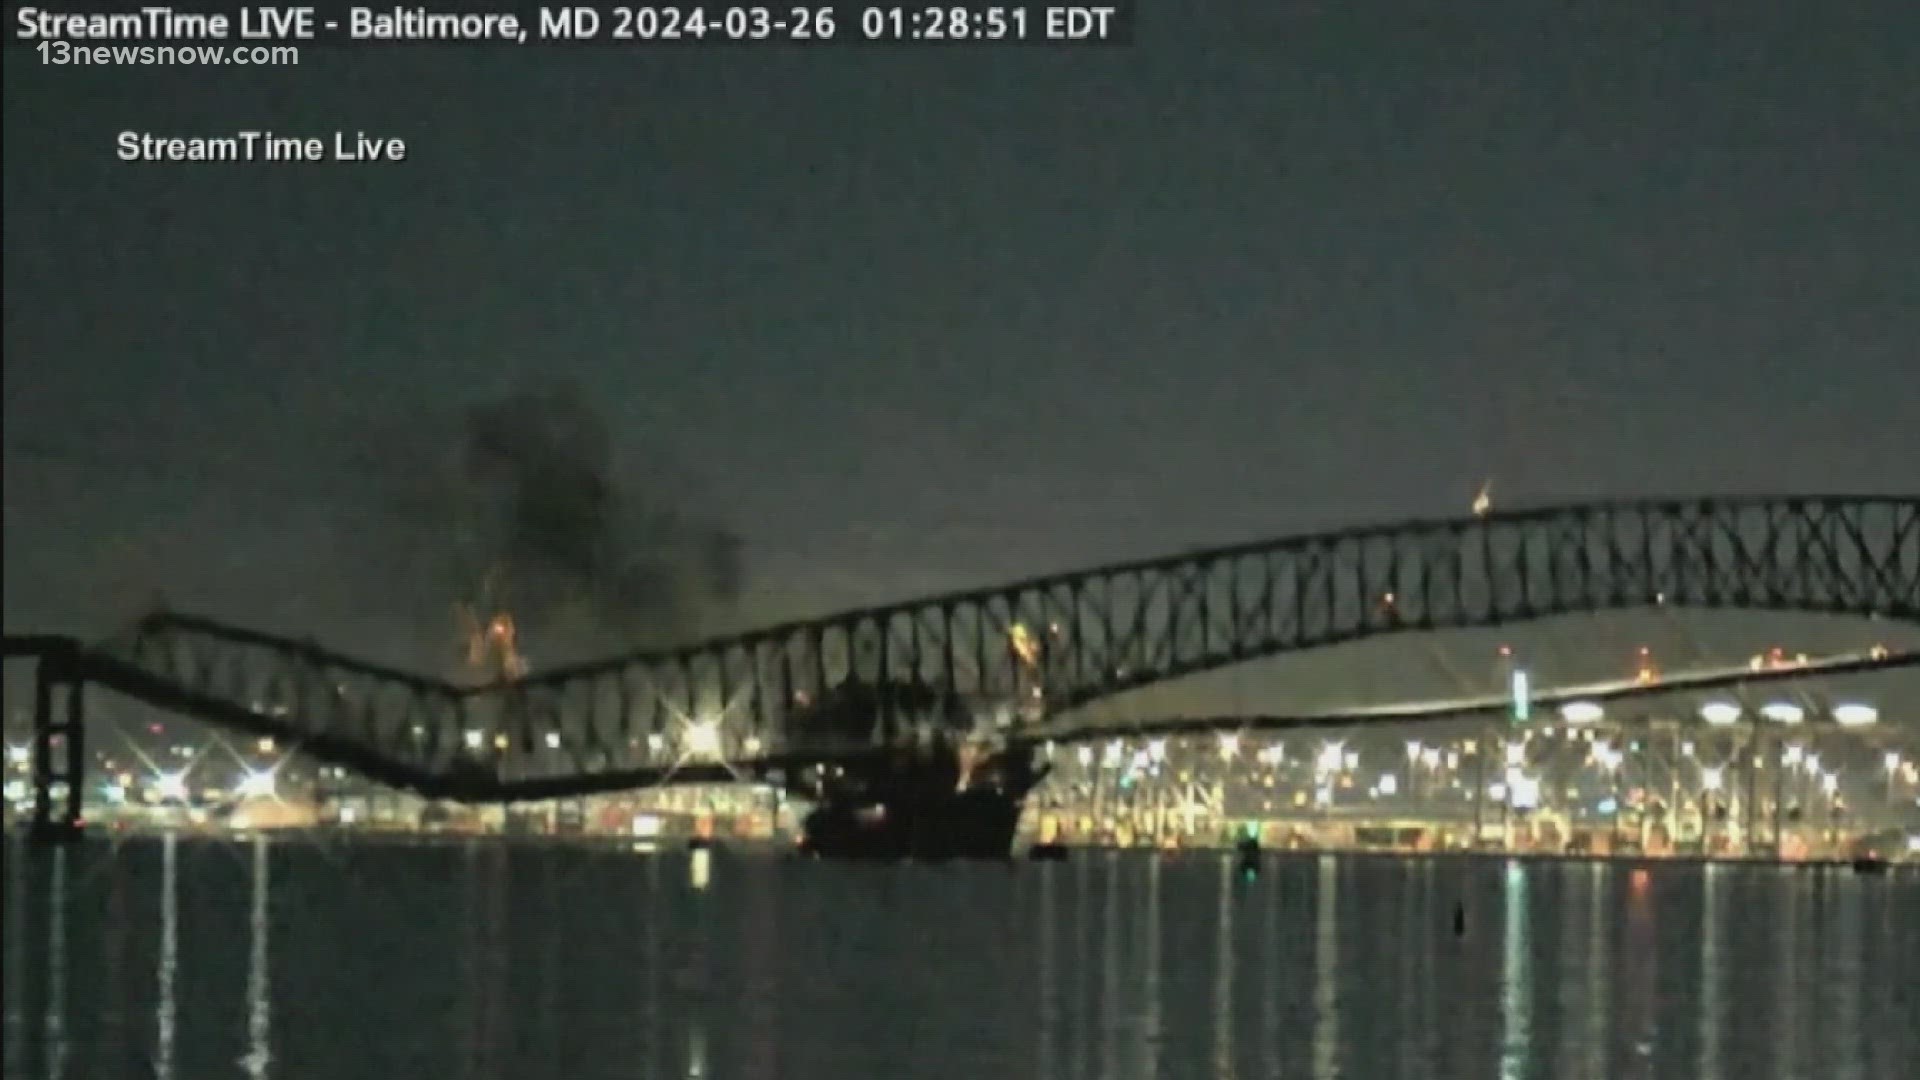 The massive cargo ship that rammed into Baltimore's Francis Scott Key Bridge was in Hampton Roads just last week.